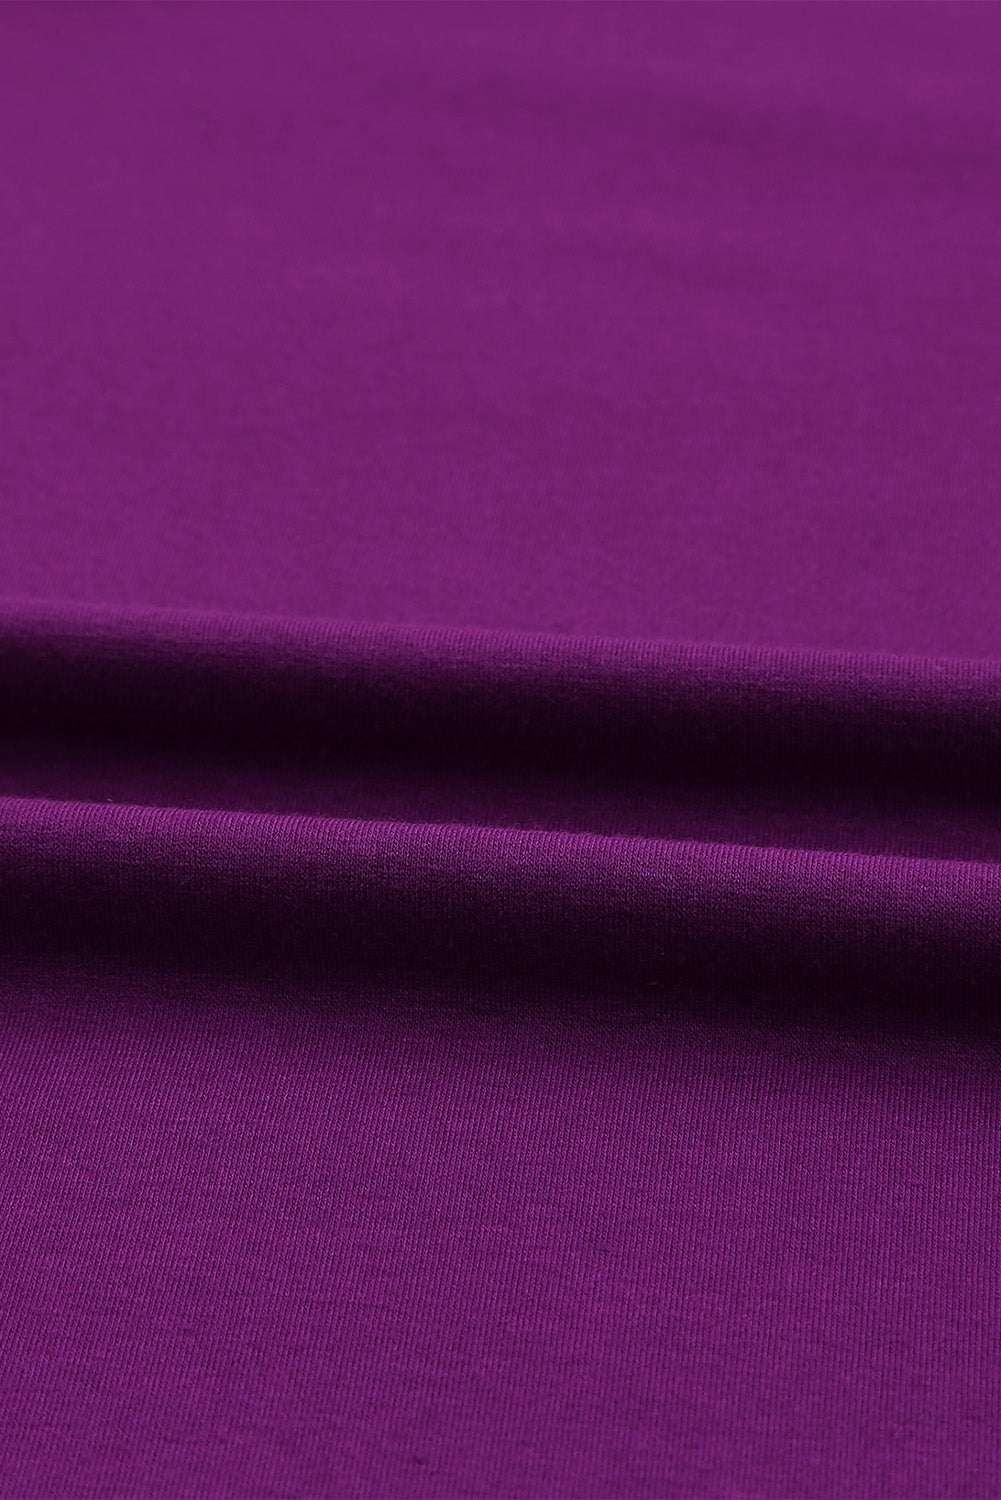 Purple Leopard Striped Color Block Plus Size Top